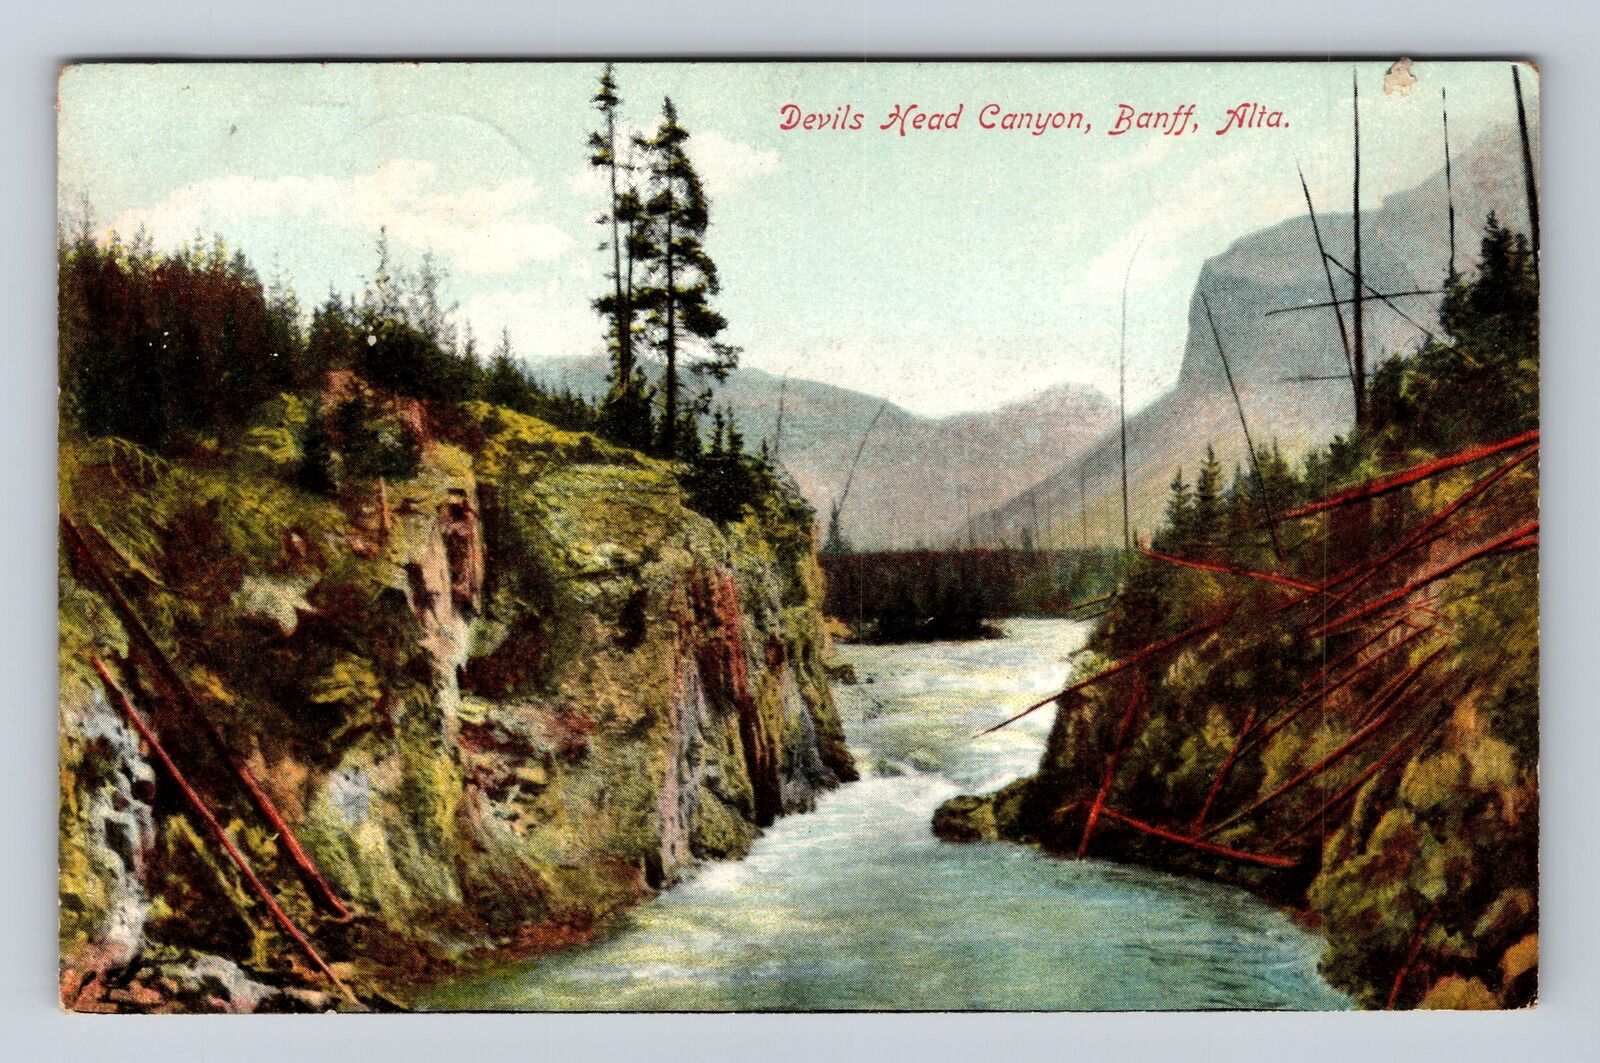 Banff Alberta-Canada, Devils Head Canyon, Antique, Vintage c1911 Postcard